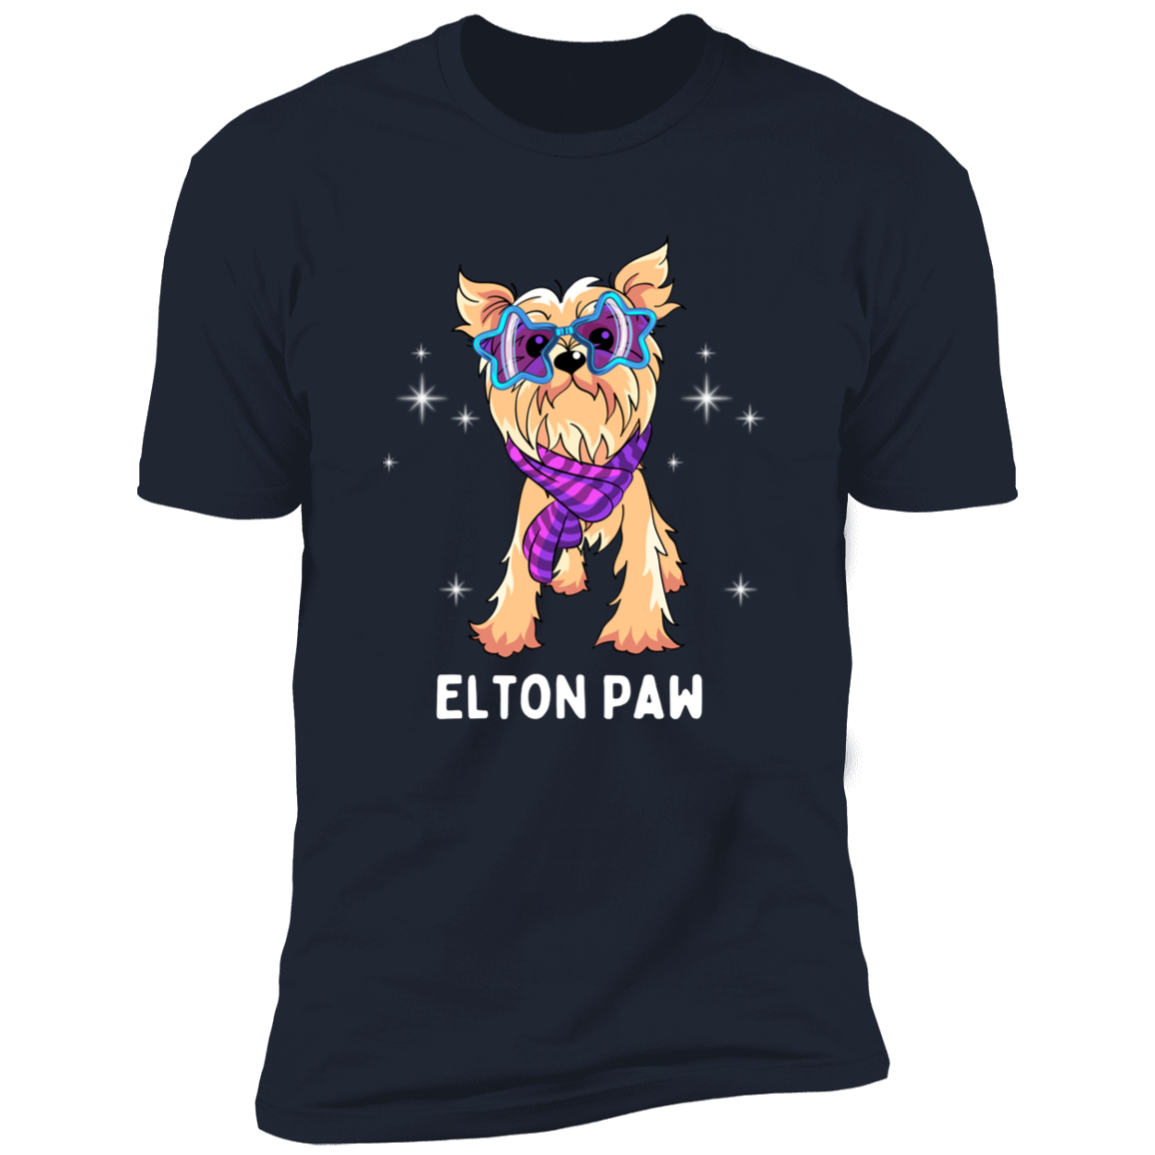 Elton Paw Dog Shirt, Funny dog shirt for humans, Dog mom shirt, dog dad shirt, in navy blue